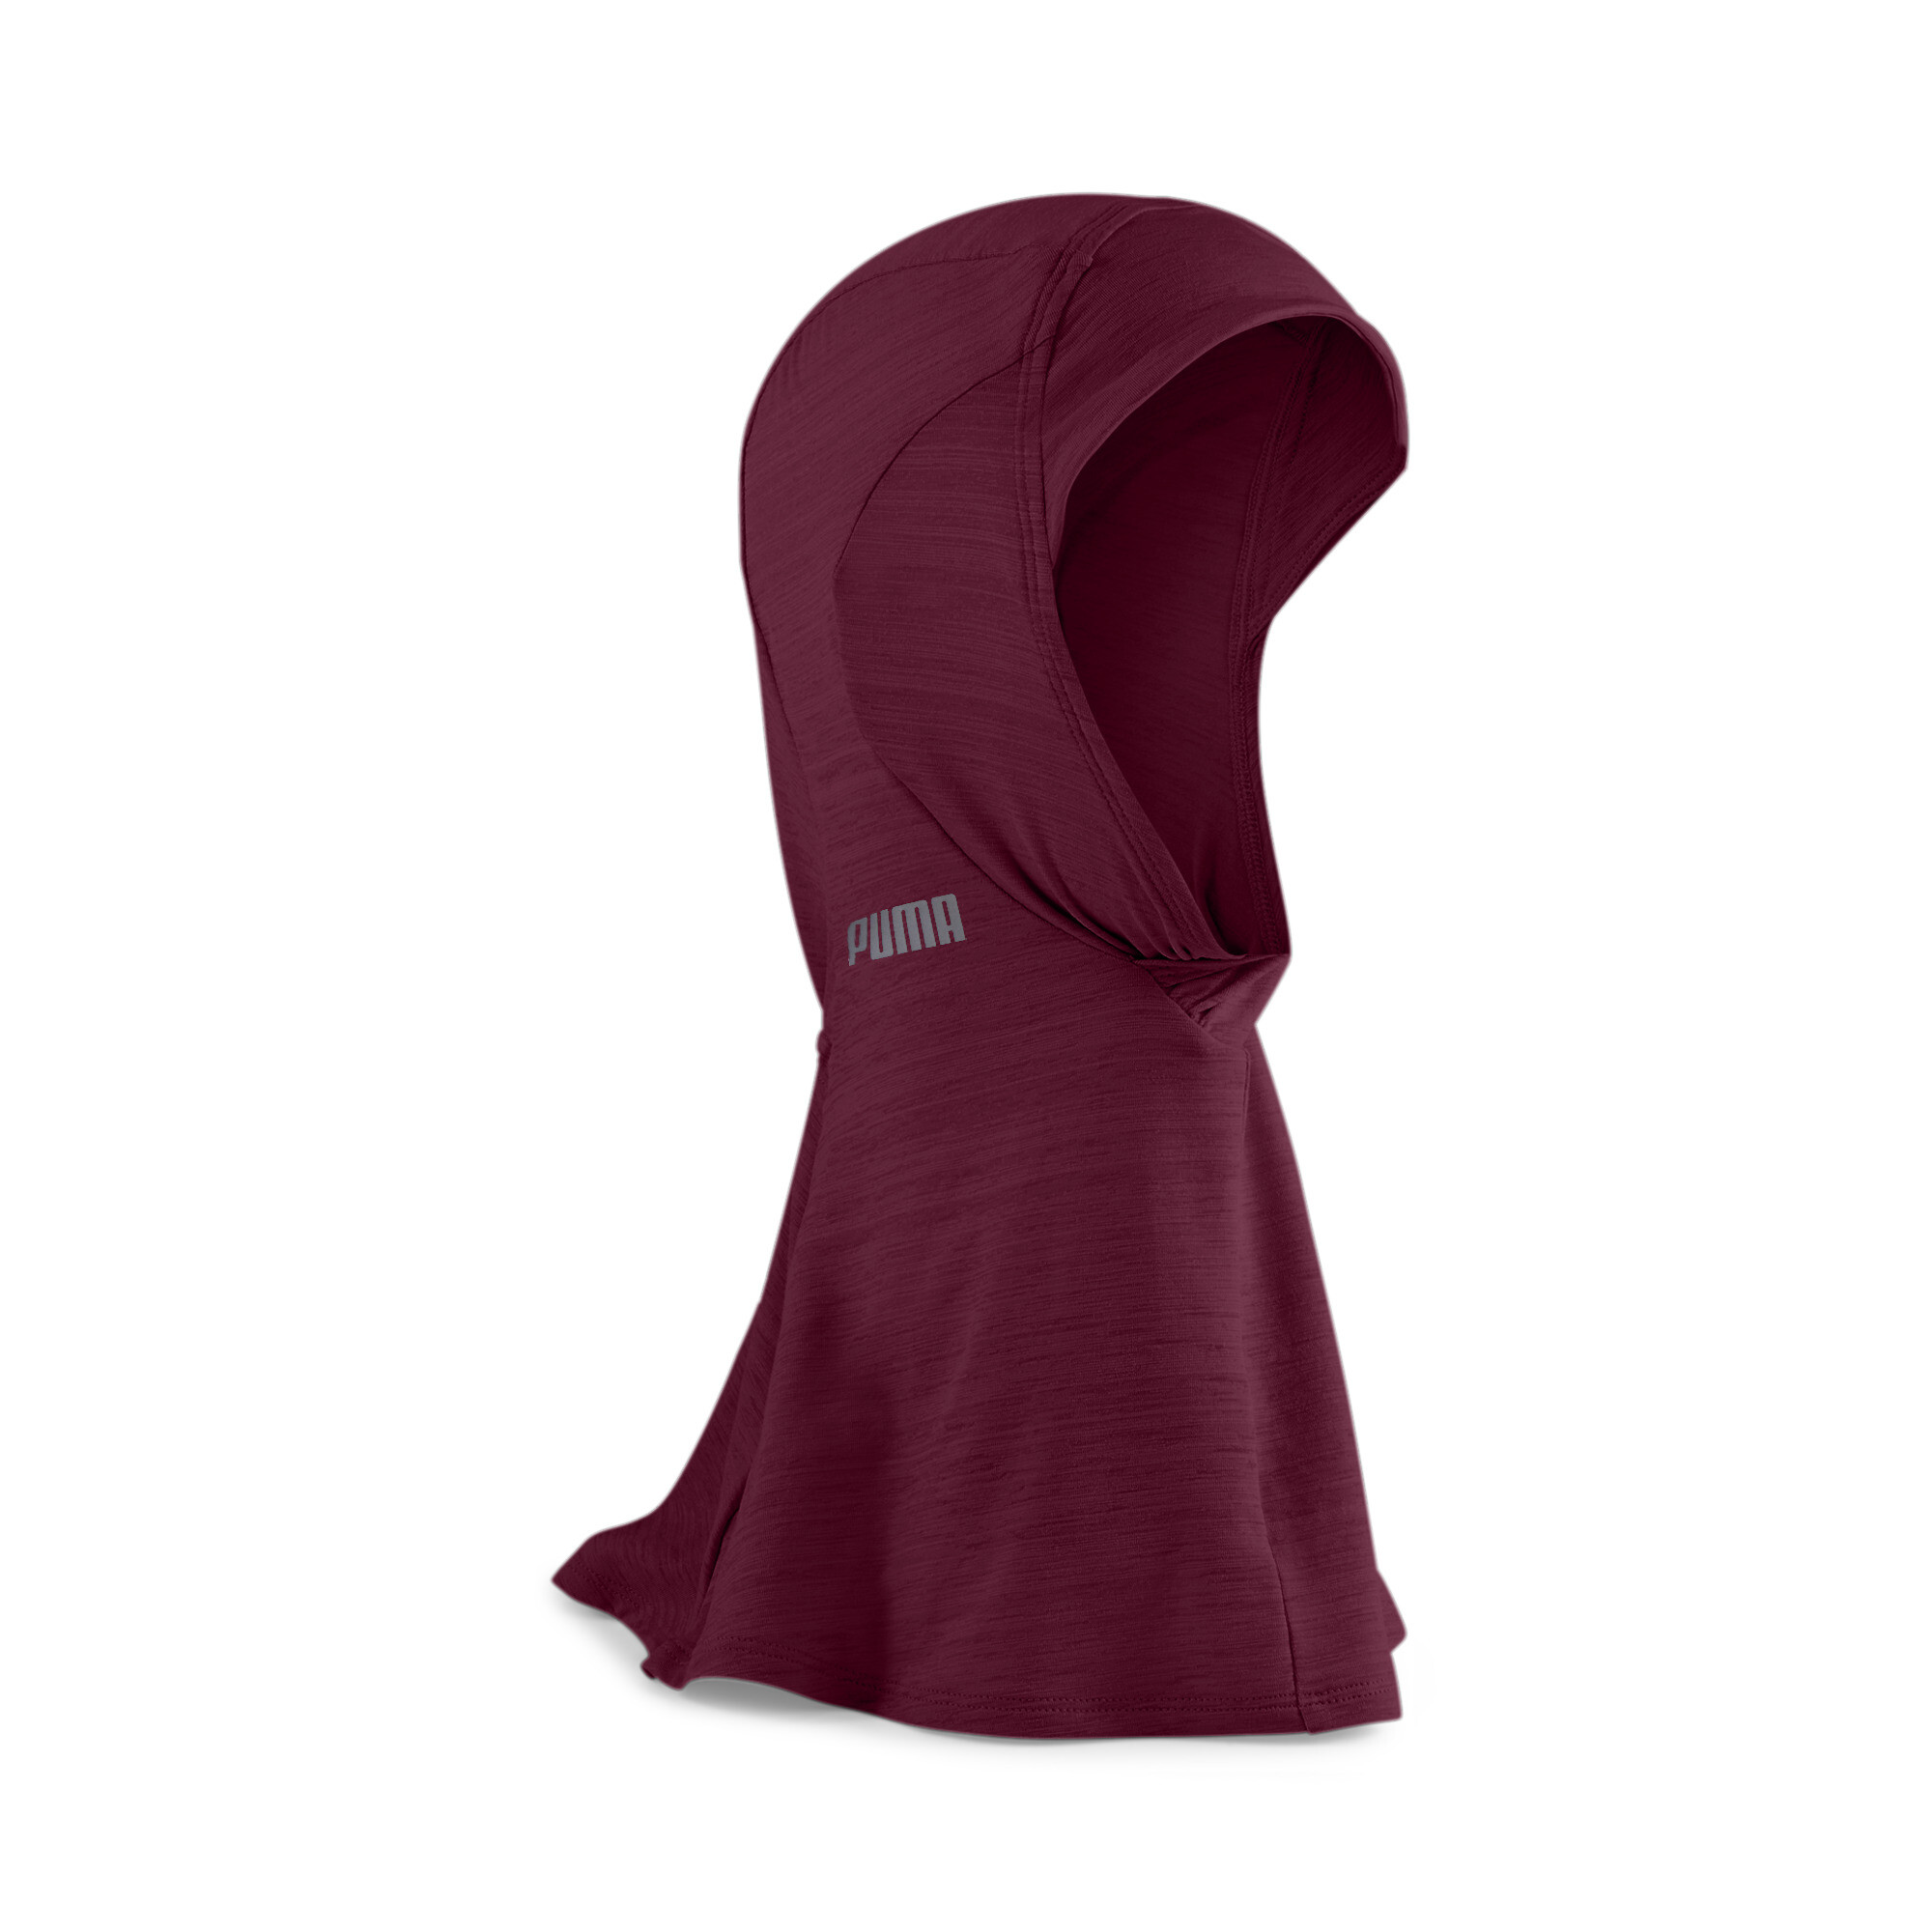 Women's Puma Sports Running Hijab, Red, Size S, Accessories